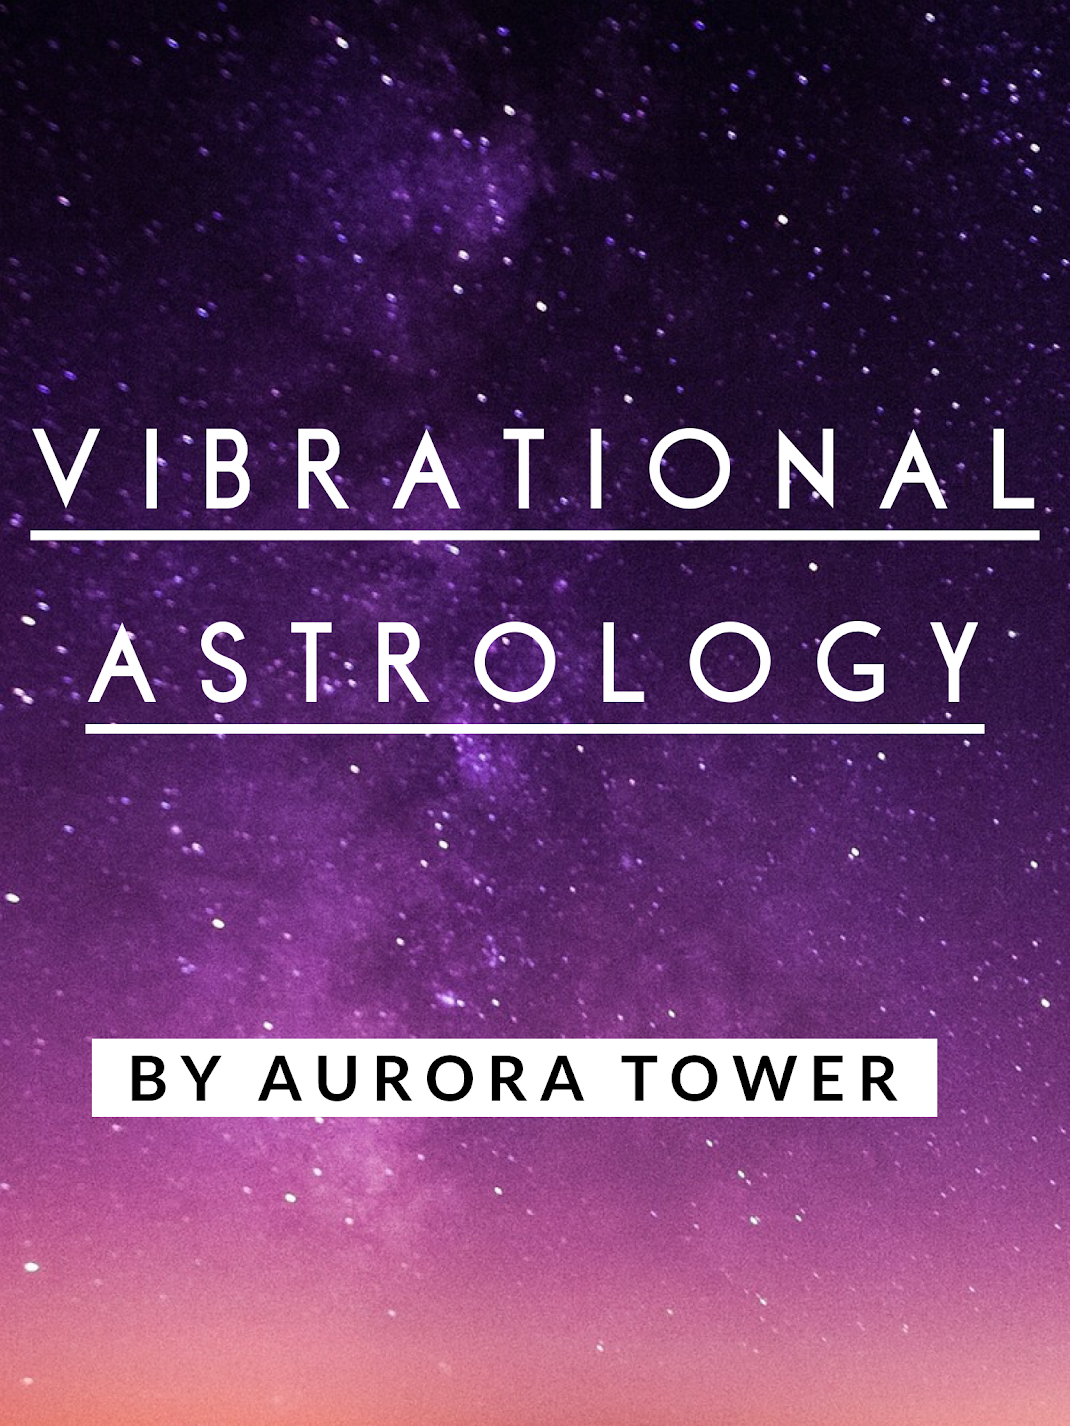 (c) Vibrational-astrology.com